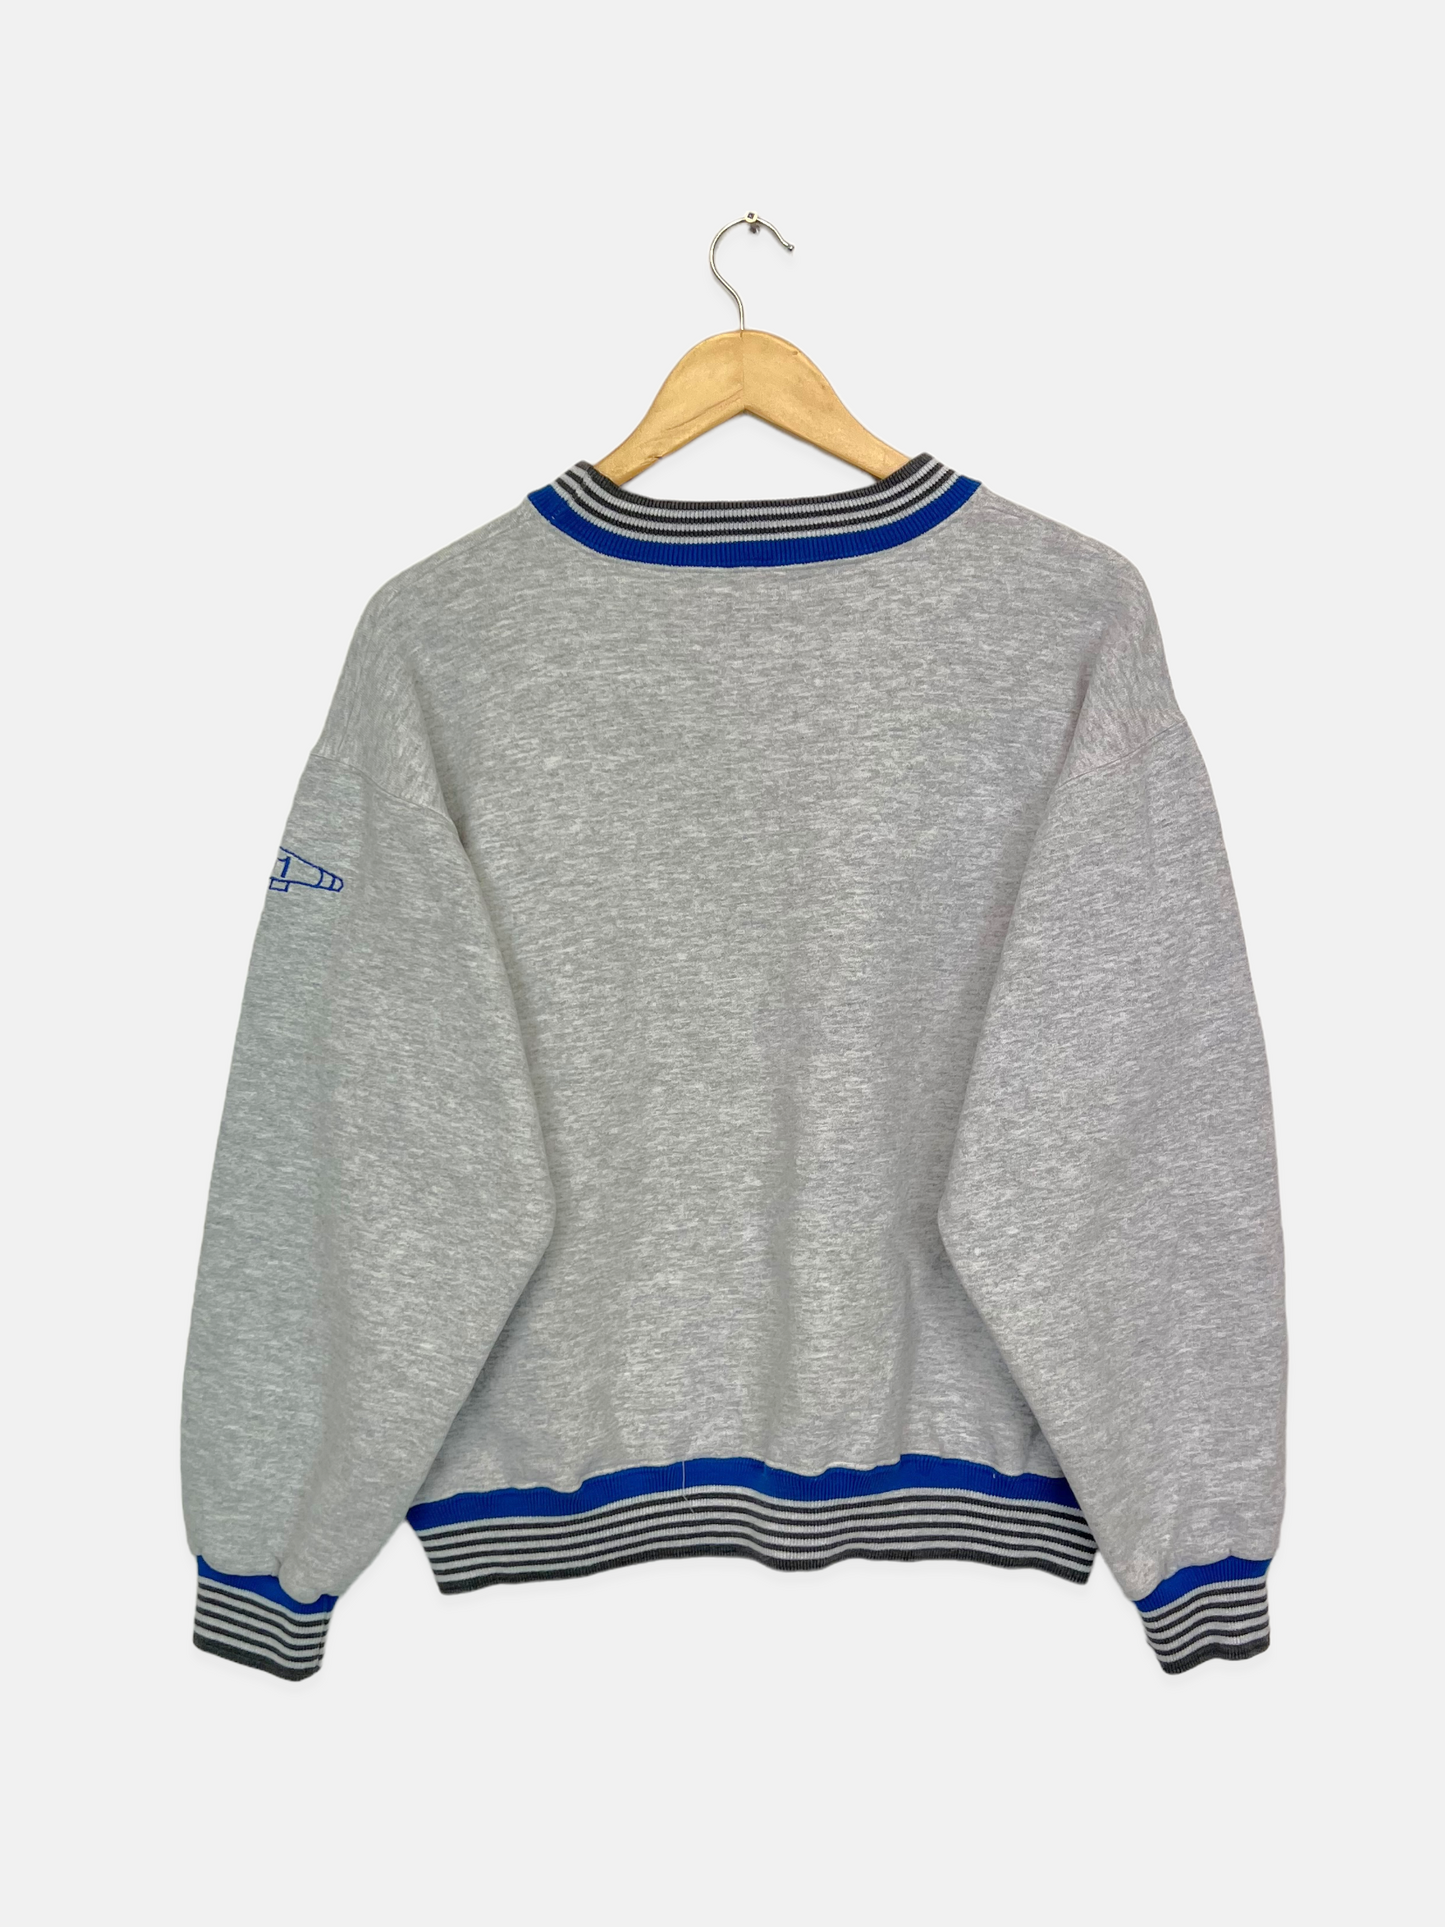 90's SHS University Embroidered Vintage Sweatshirt Size 10